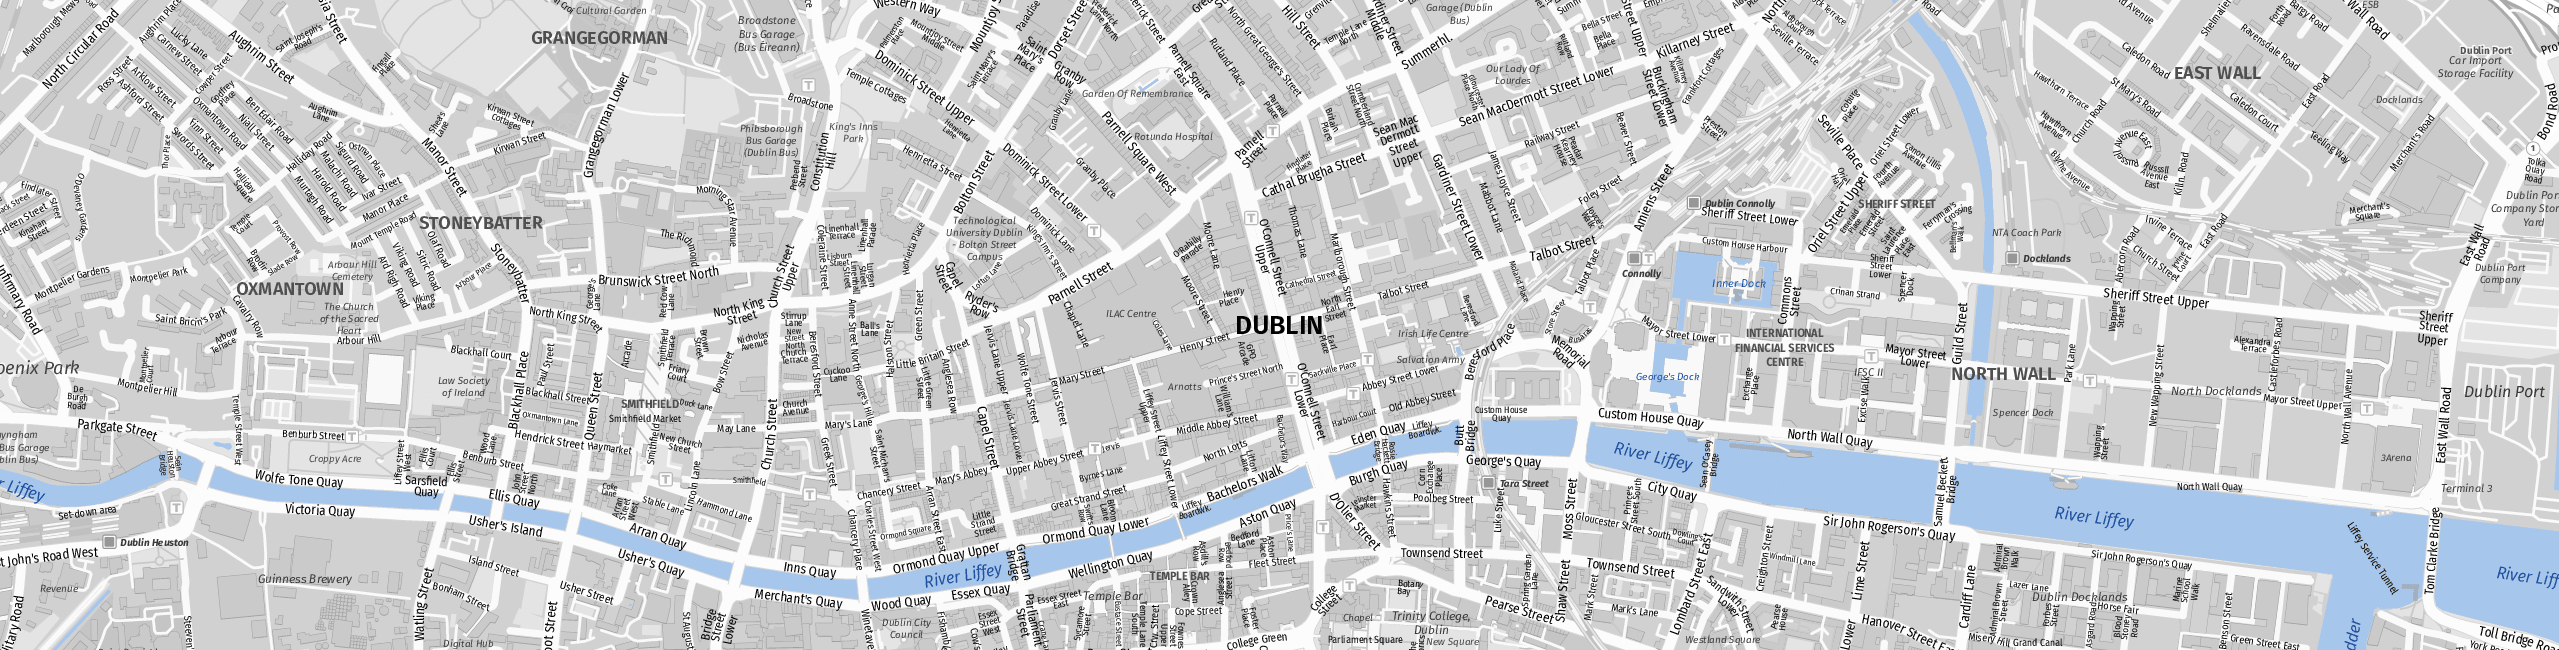 Stadtplan Dublin zum Downloaden.